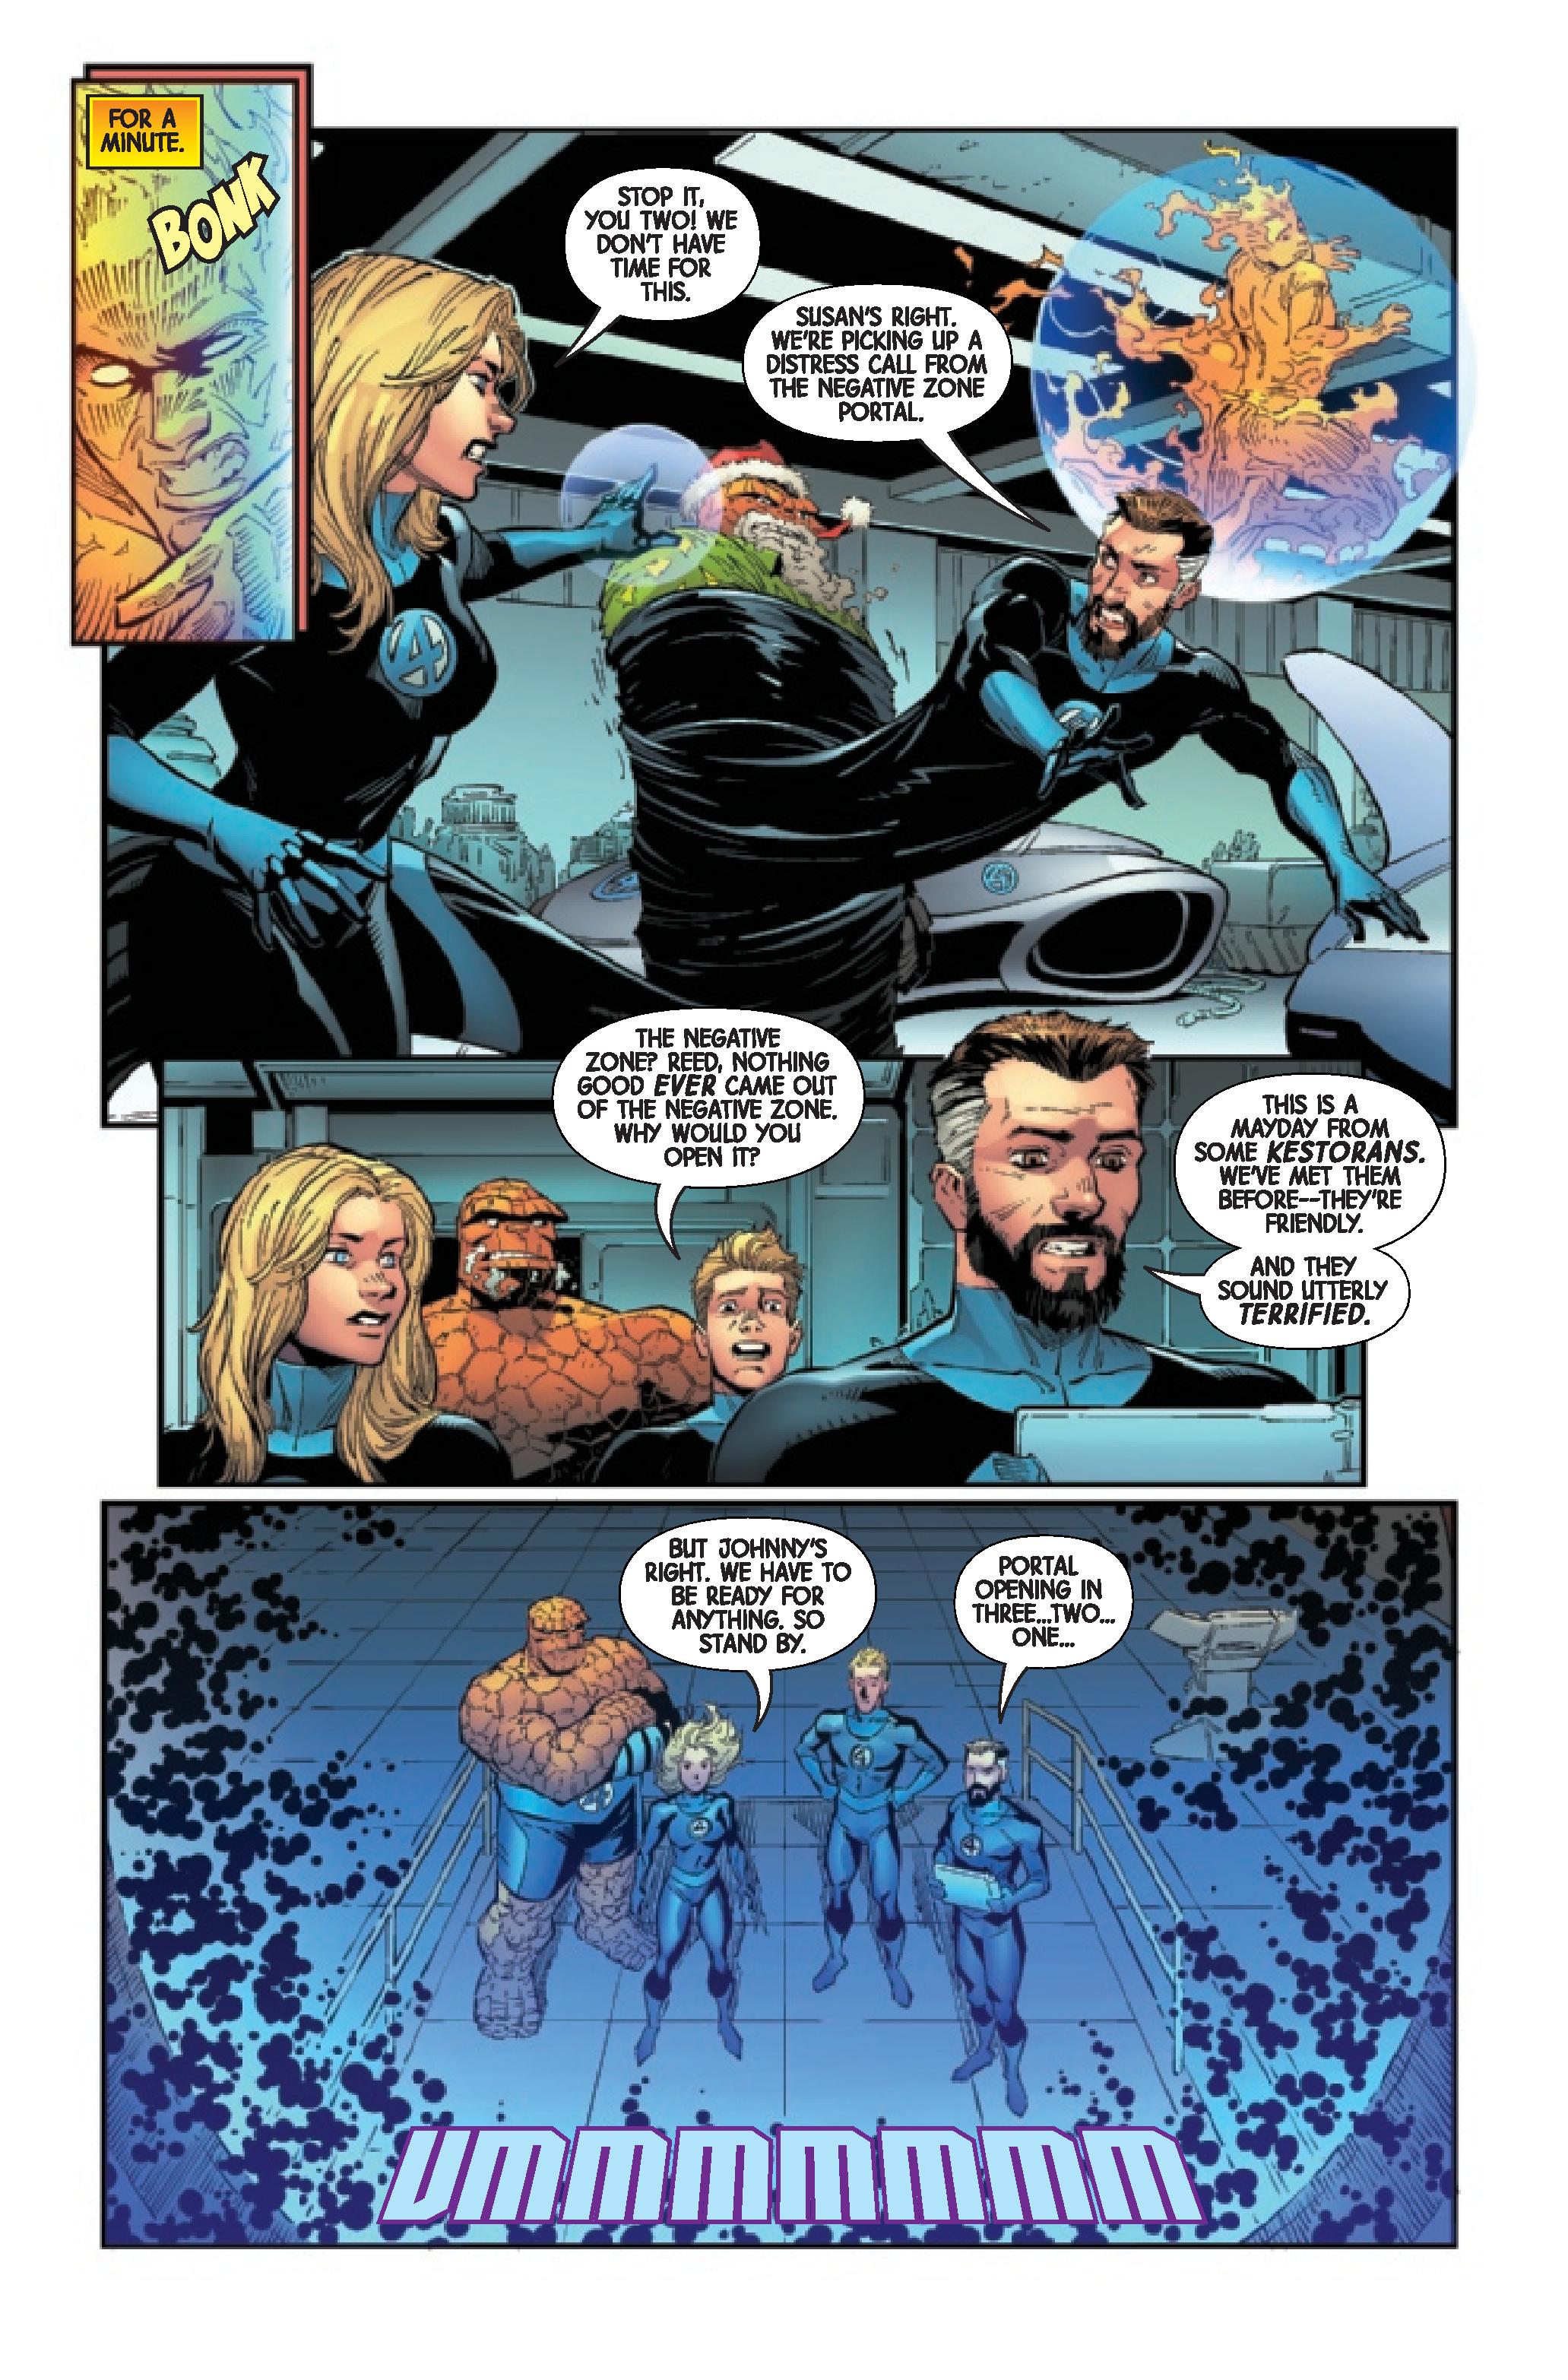 Annihilation Scourge Fantastic Four #1